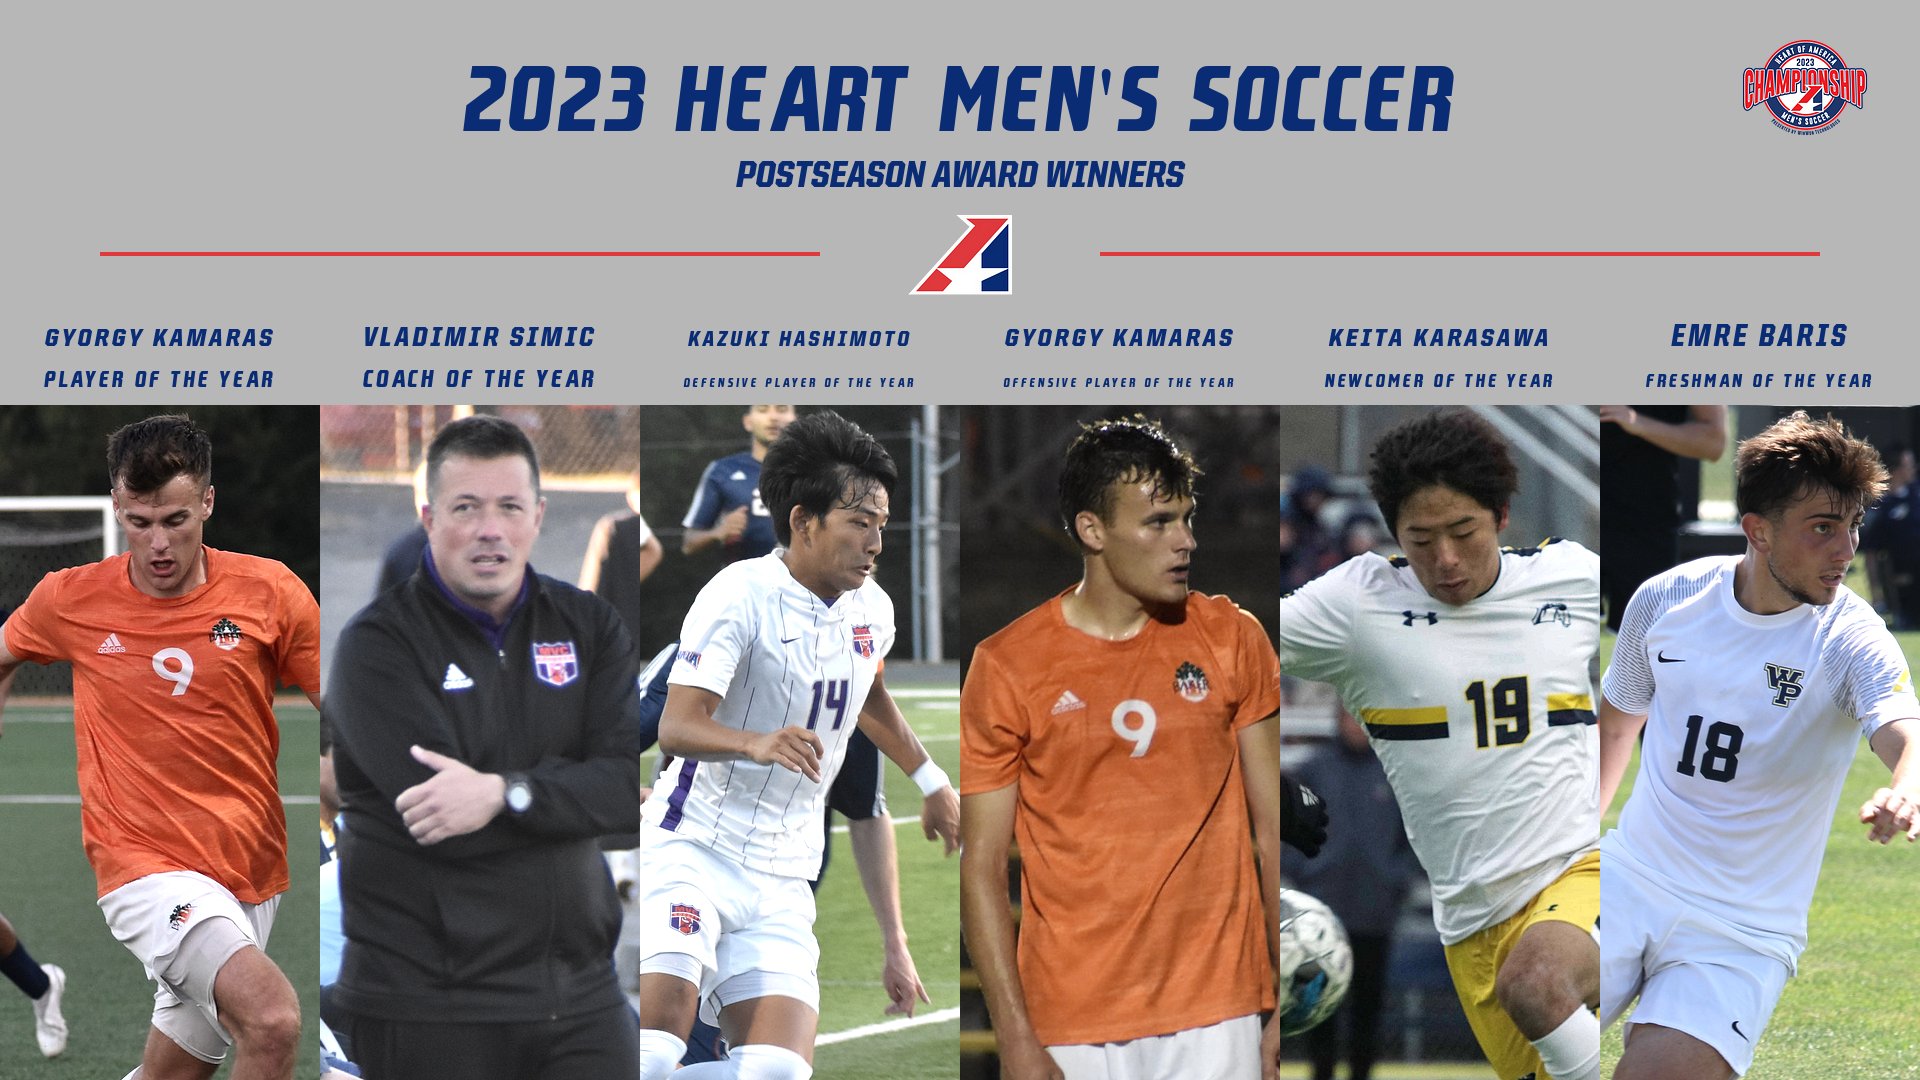 2023 Heart Men’s Soccer All-Conference Teams & Postseason Awards Announced